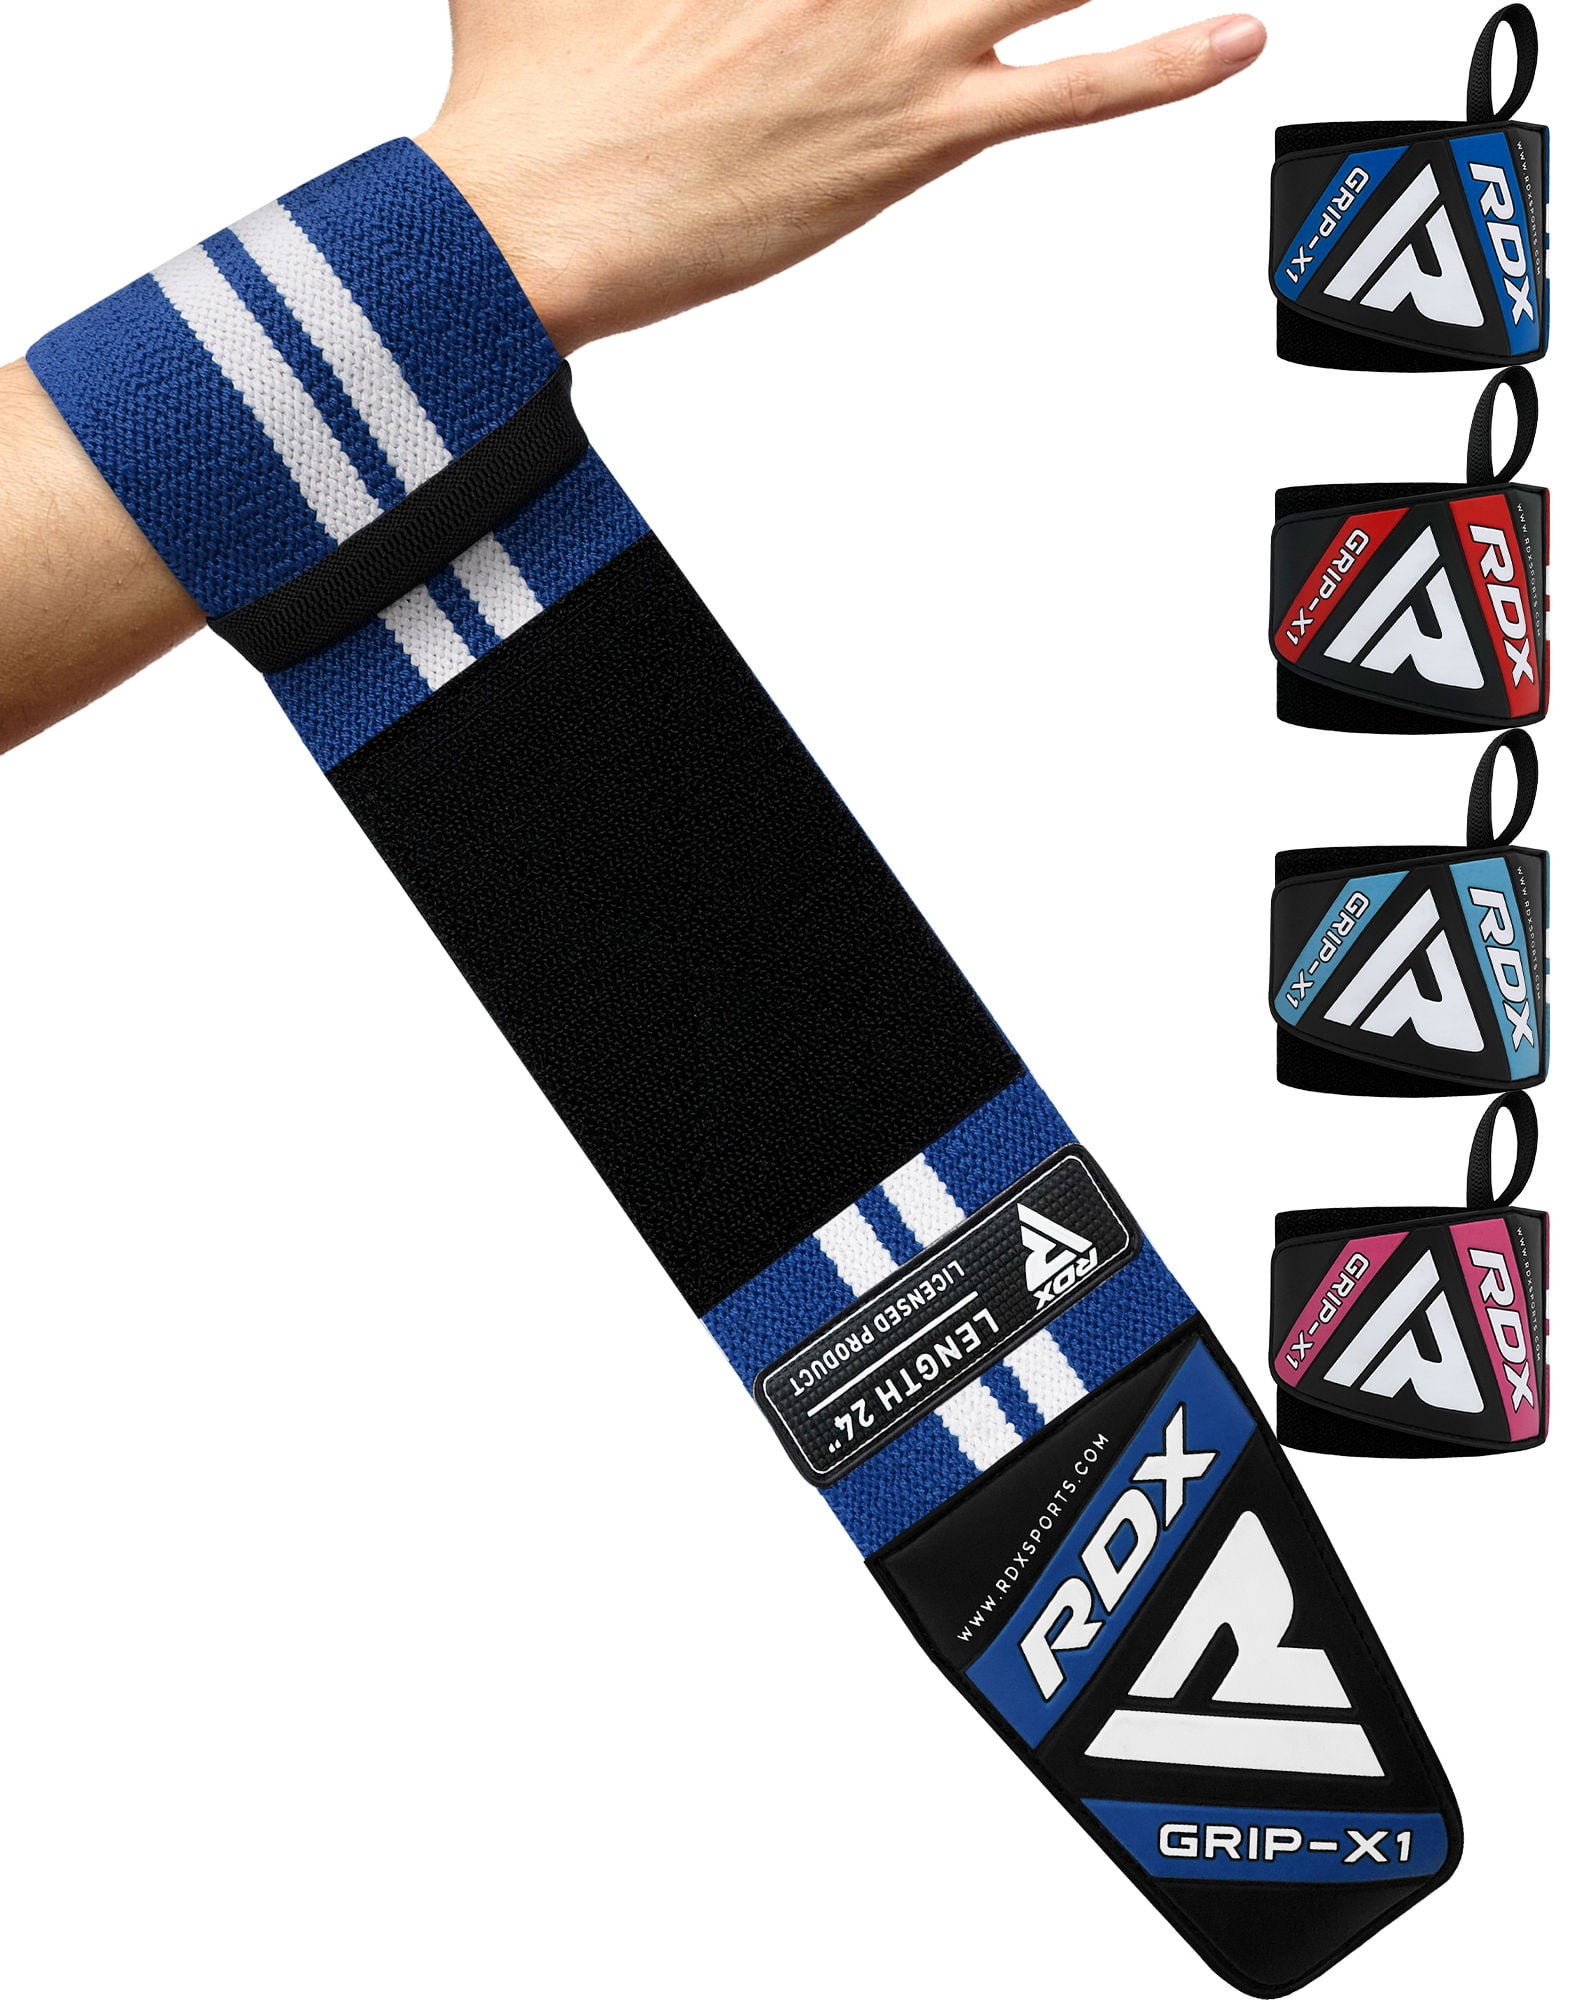 1X Weight Lifting Straps Wrap Gym Wrist Bar Training Support Grip Bandage XL 